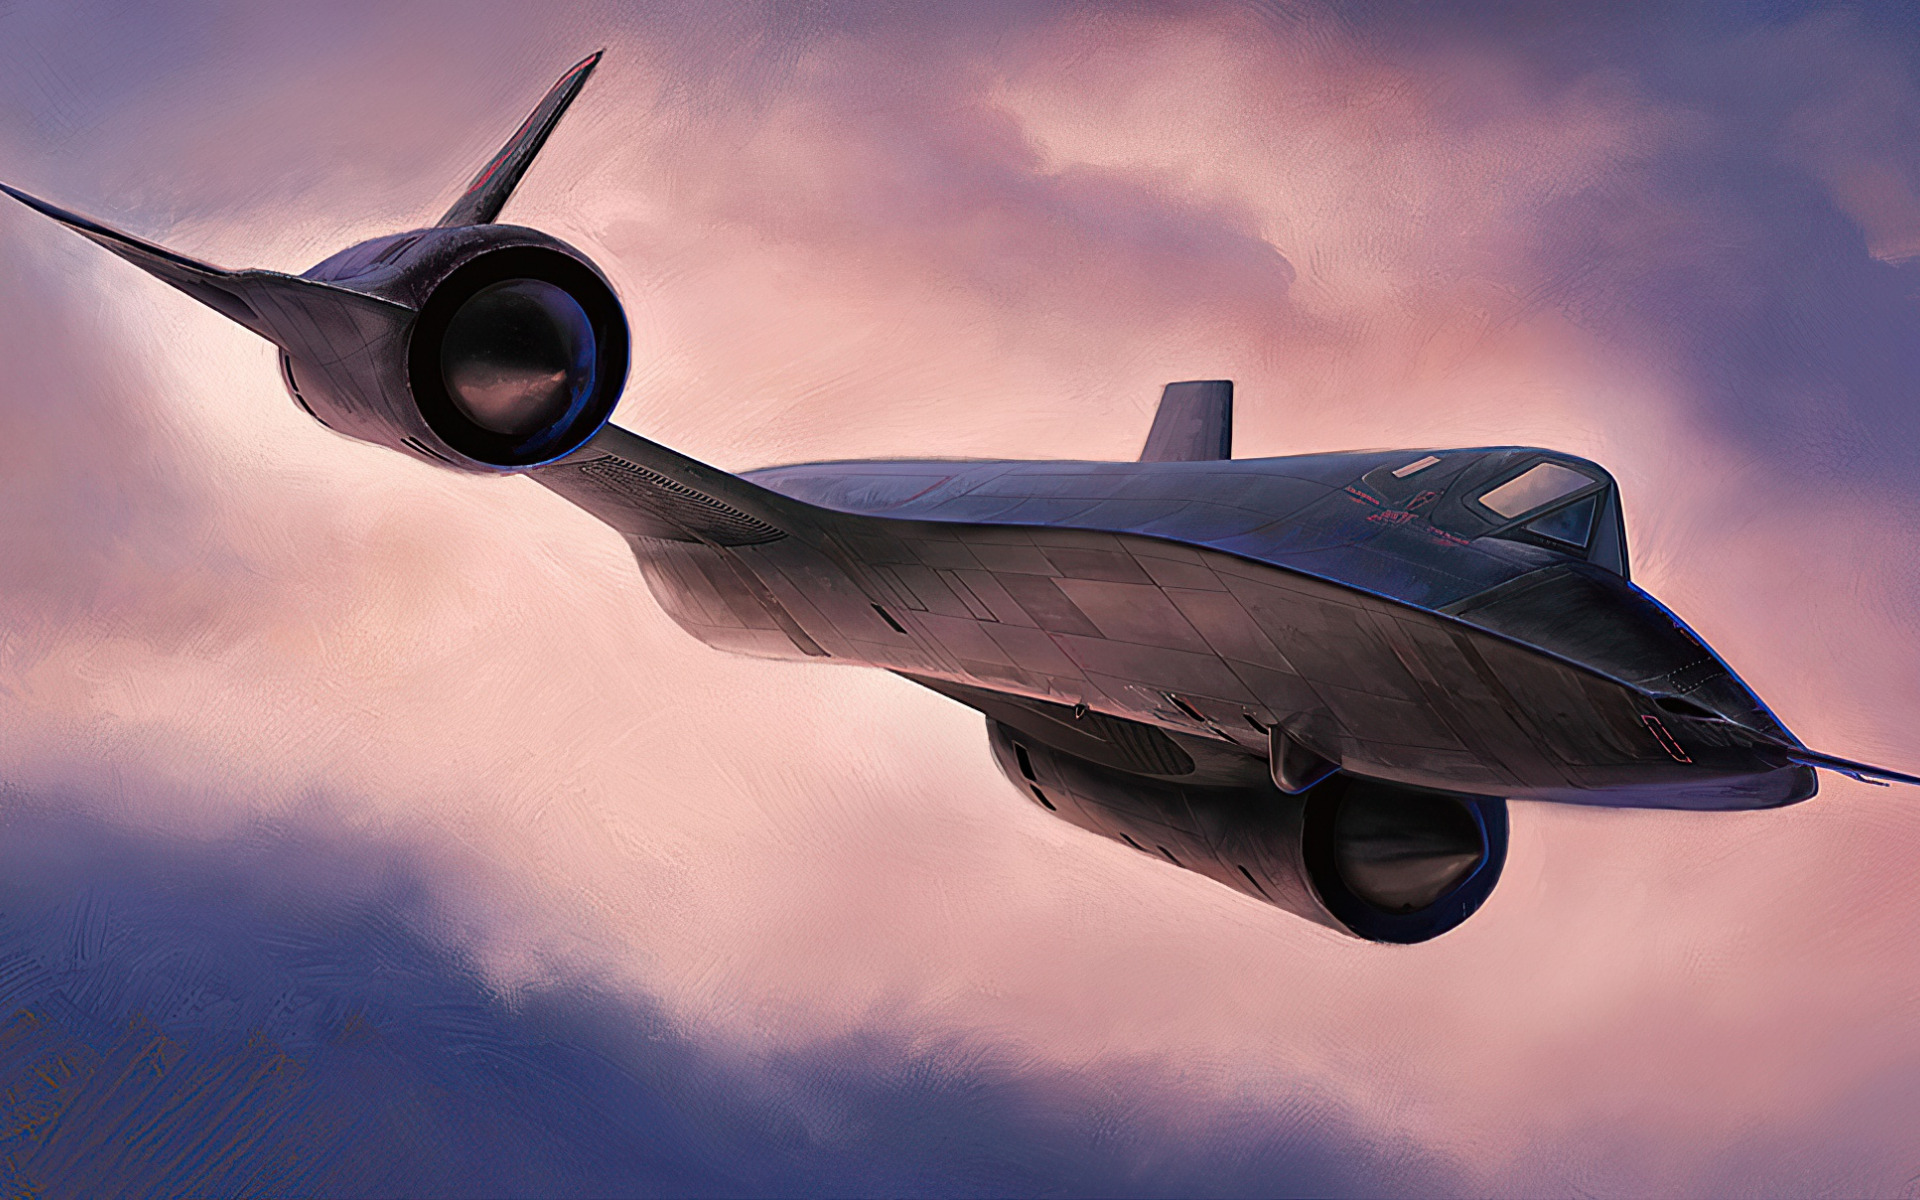 lockheed-sr-71-blackbird-reconnaissance-aircraft-military-aircraft